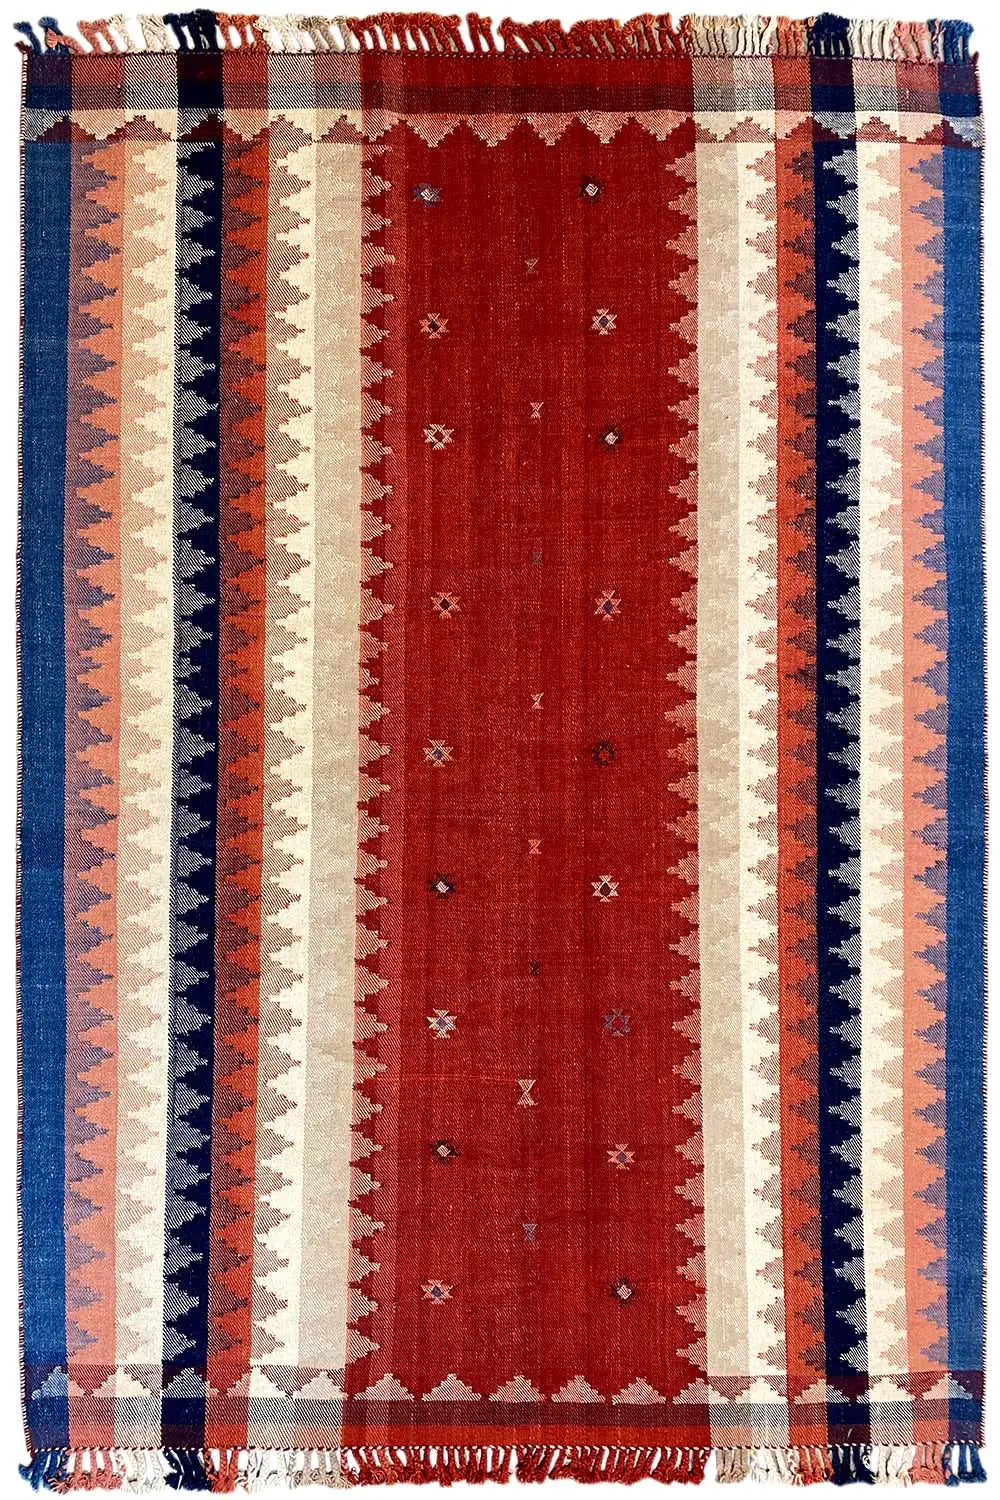 Jajim Exclusive Teppiche (223x167cm) - German Carpet Shop